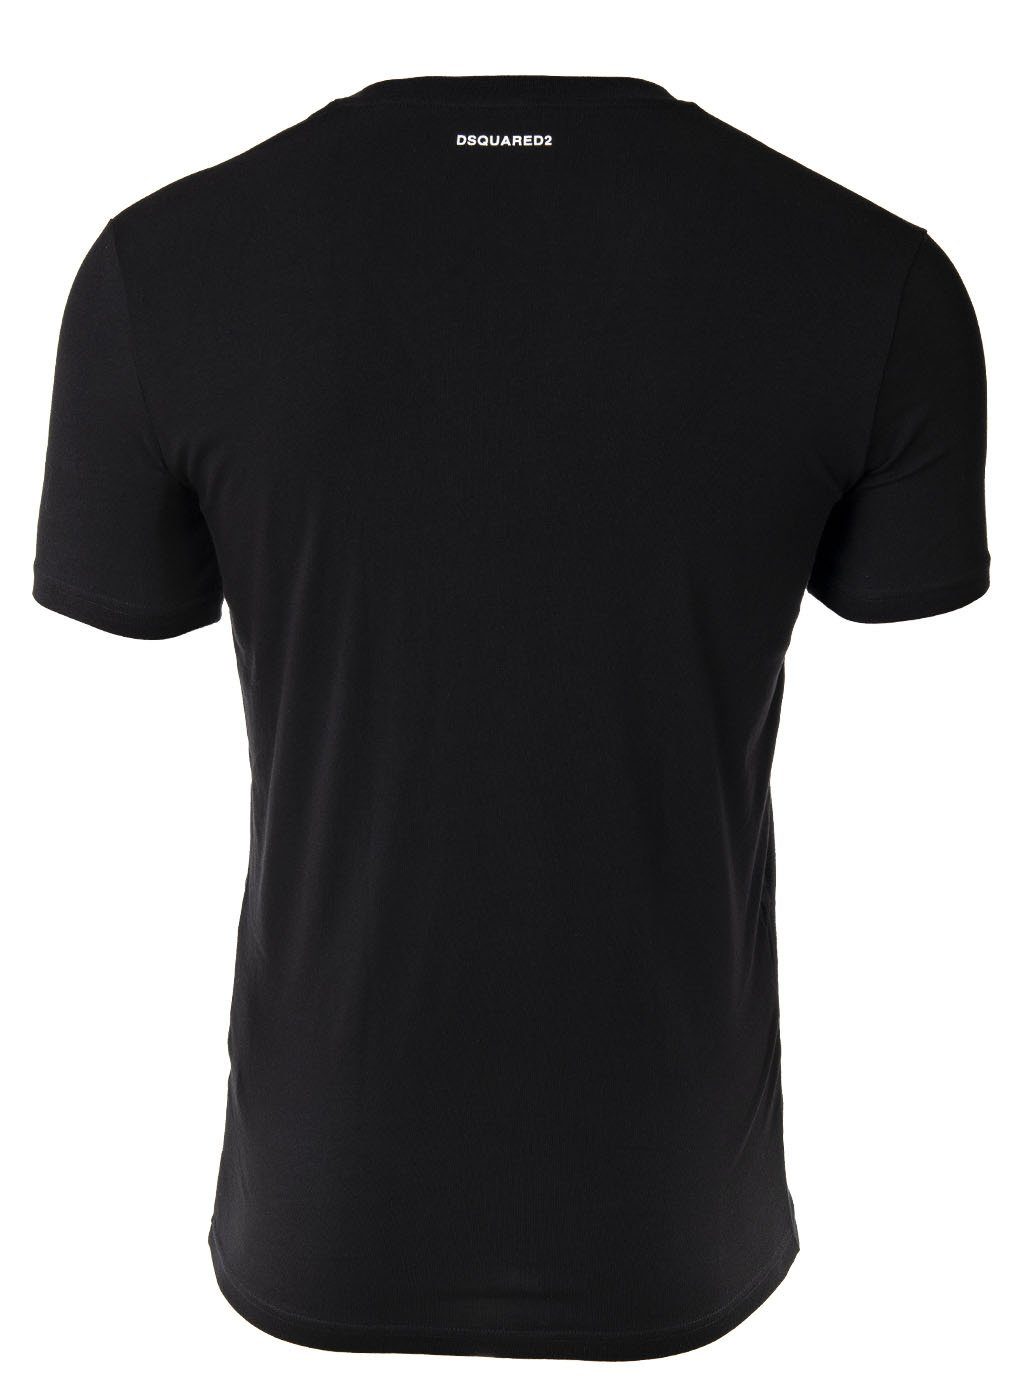 T-Shirt - Twin Schwarz Stretch Cotton Dsquared2 Herren T-Shirt Pack V-Neck,